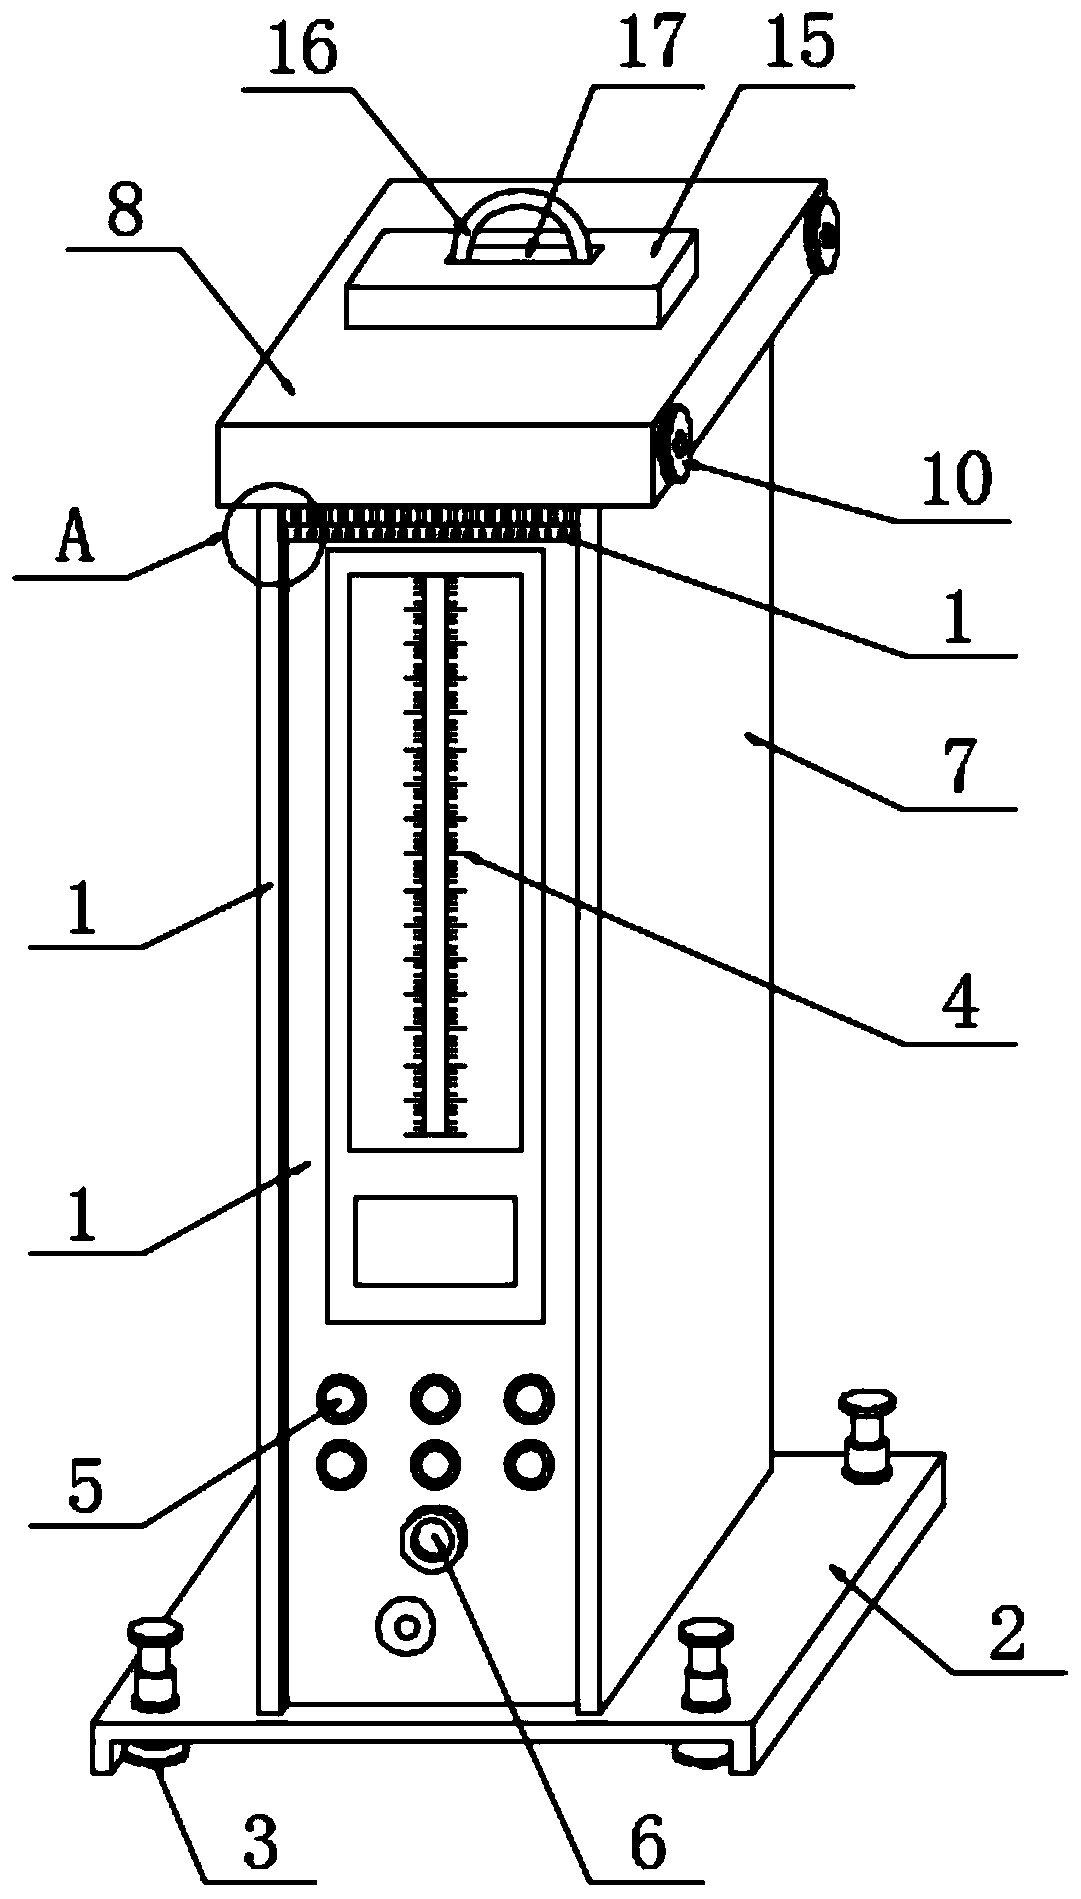 Air gauge of electronic beam